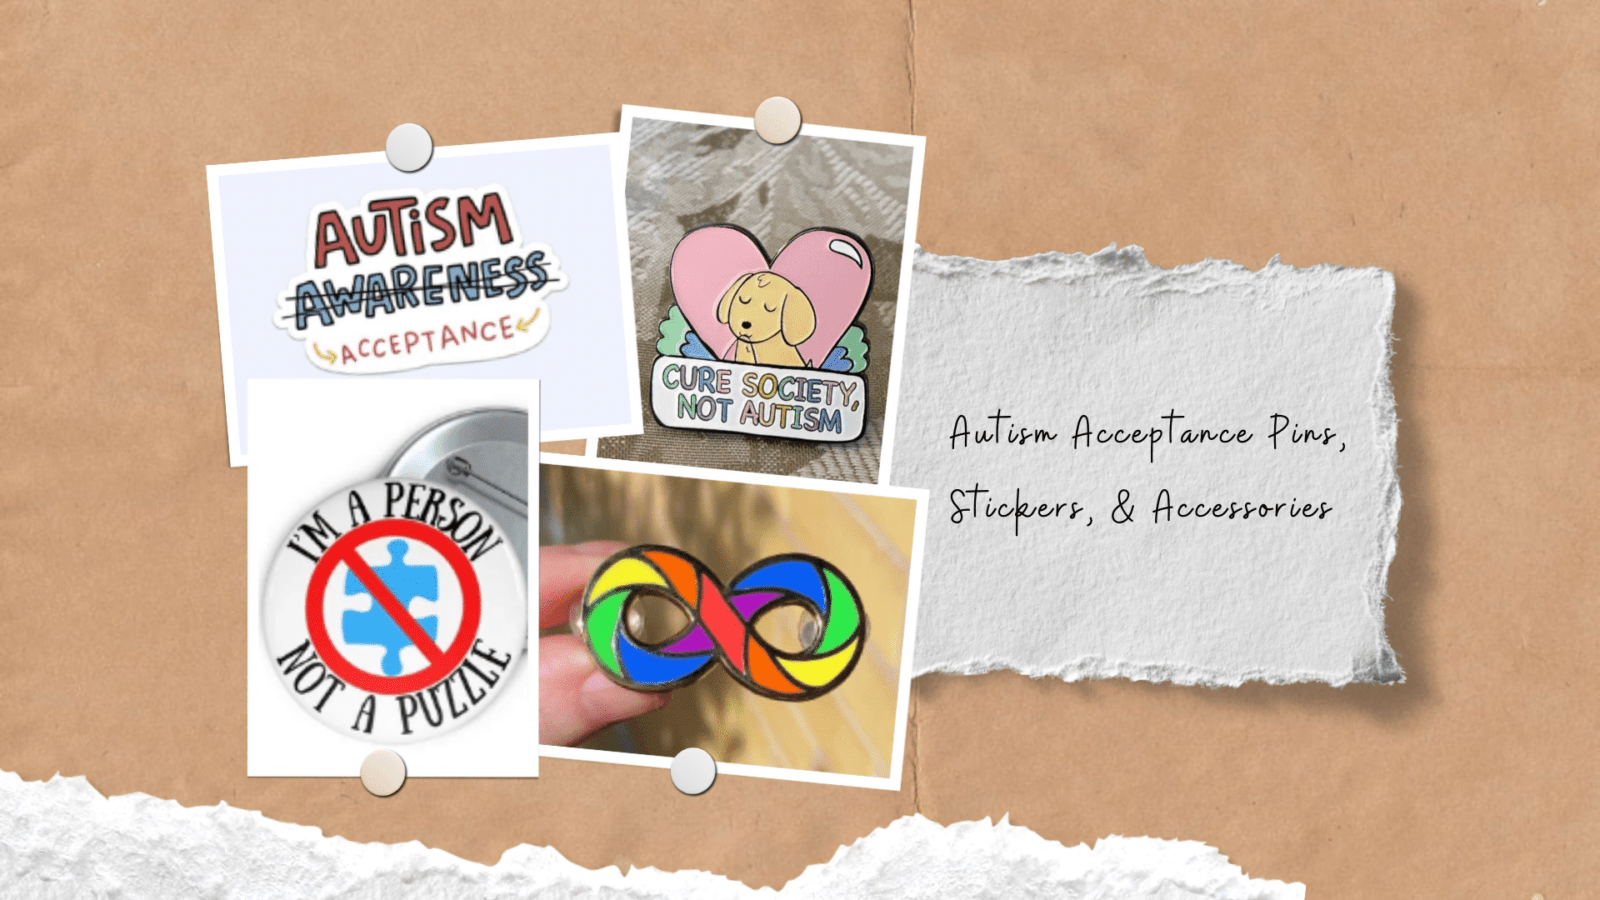 Autism Acceptance Pins, Stickers, & Accessories – Celebrate Neurodiversity